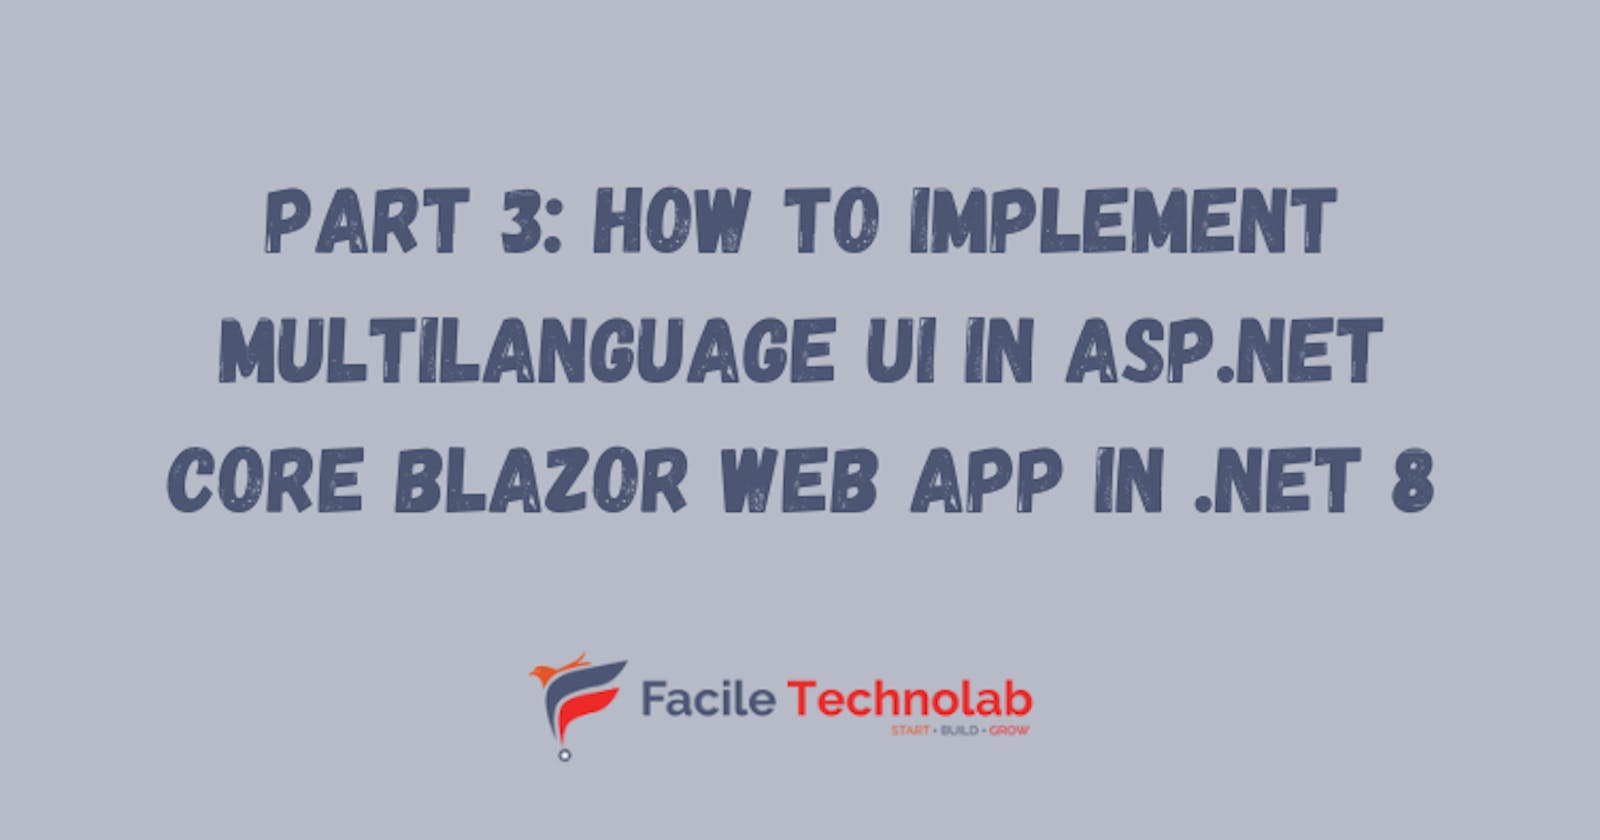 Part 3: How to Implement Multilanguage UI in ASP.NET Core Blazor Web App in .NET 8